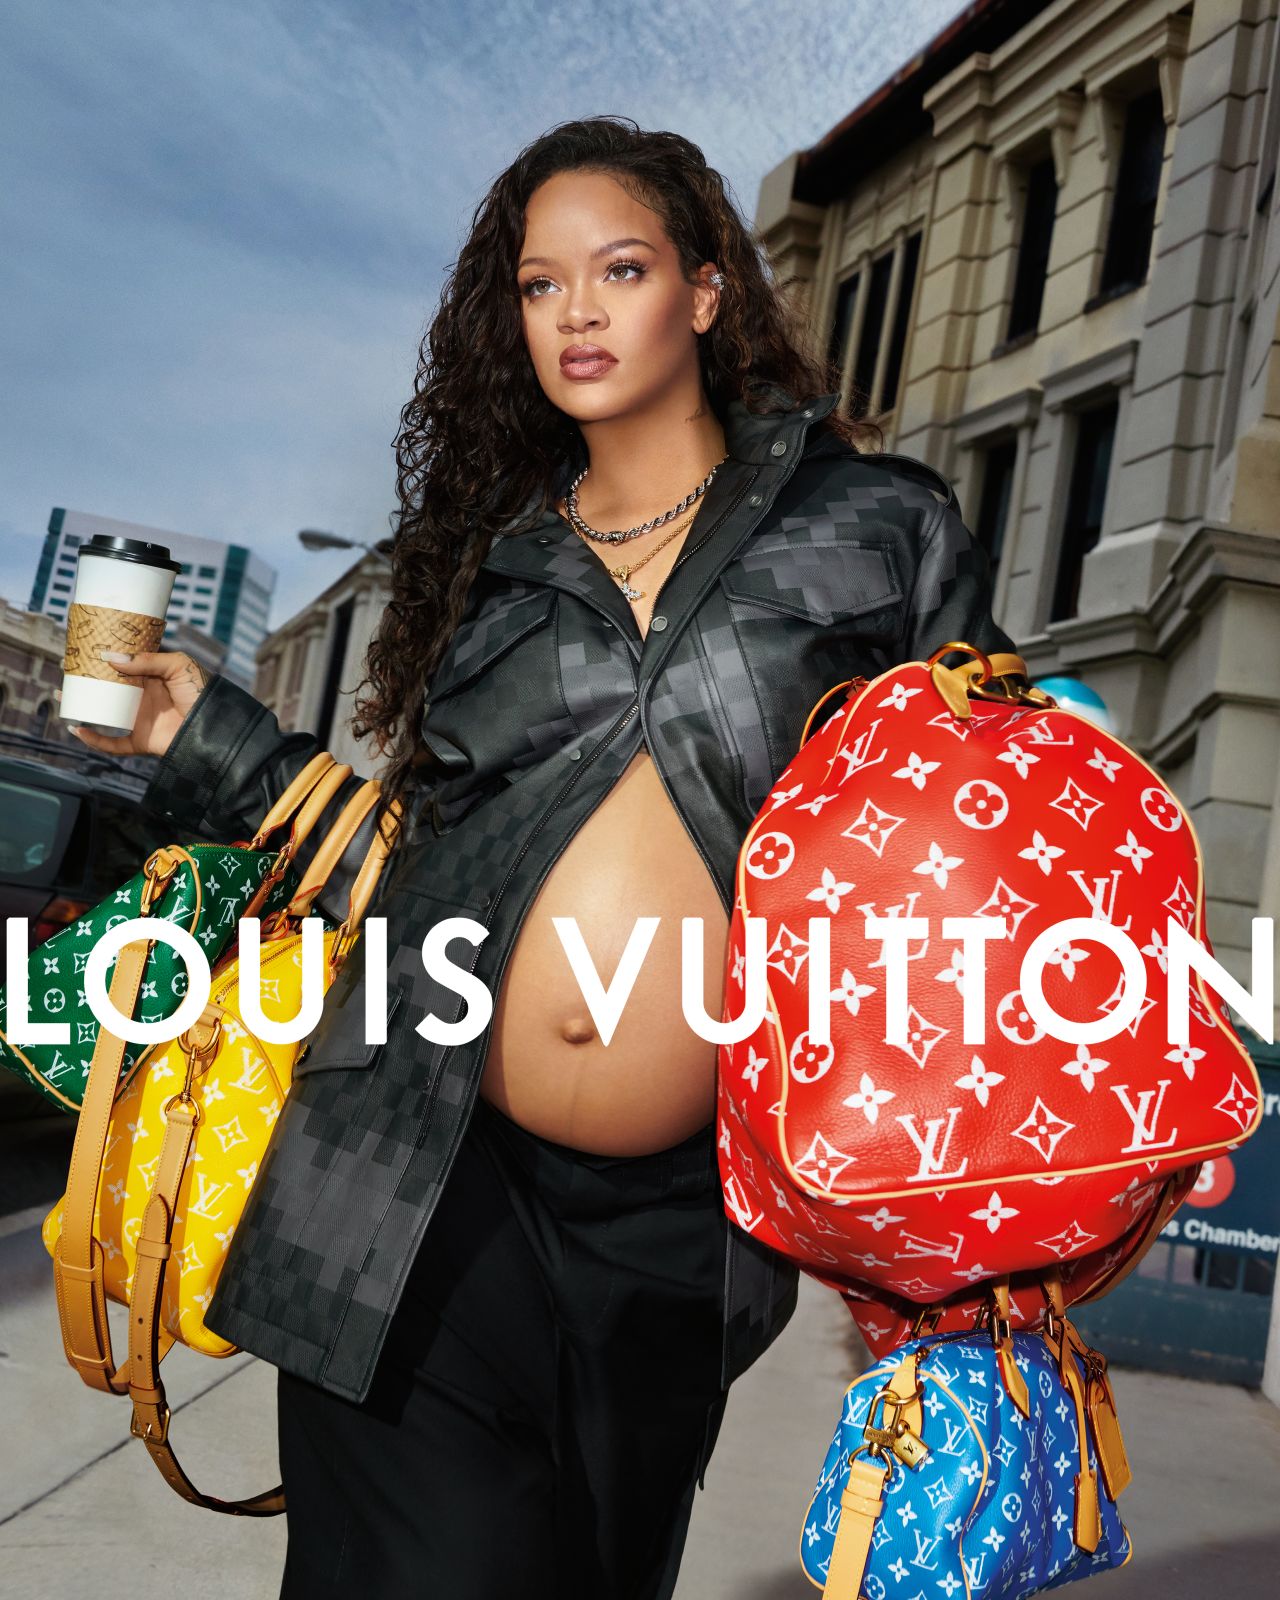 Louis Vuitton - Stellar Times for Unisex - A++ Louis Vuitton